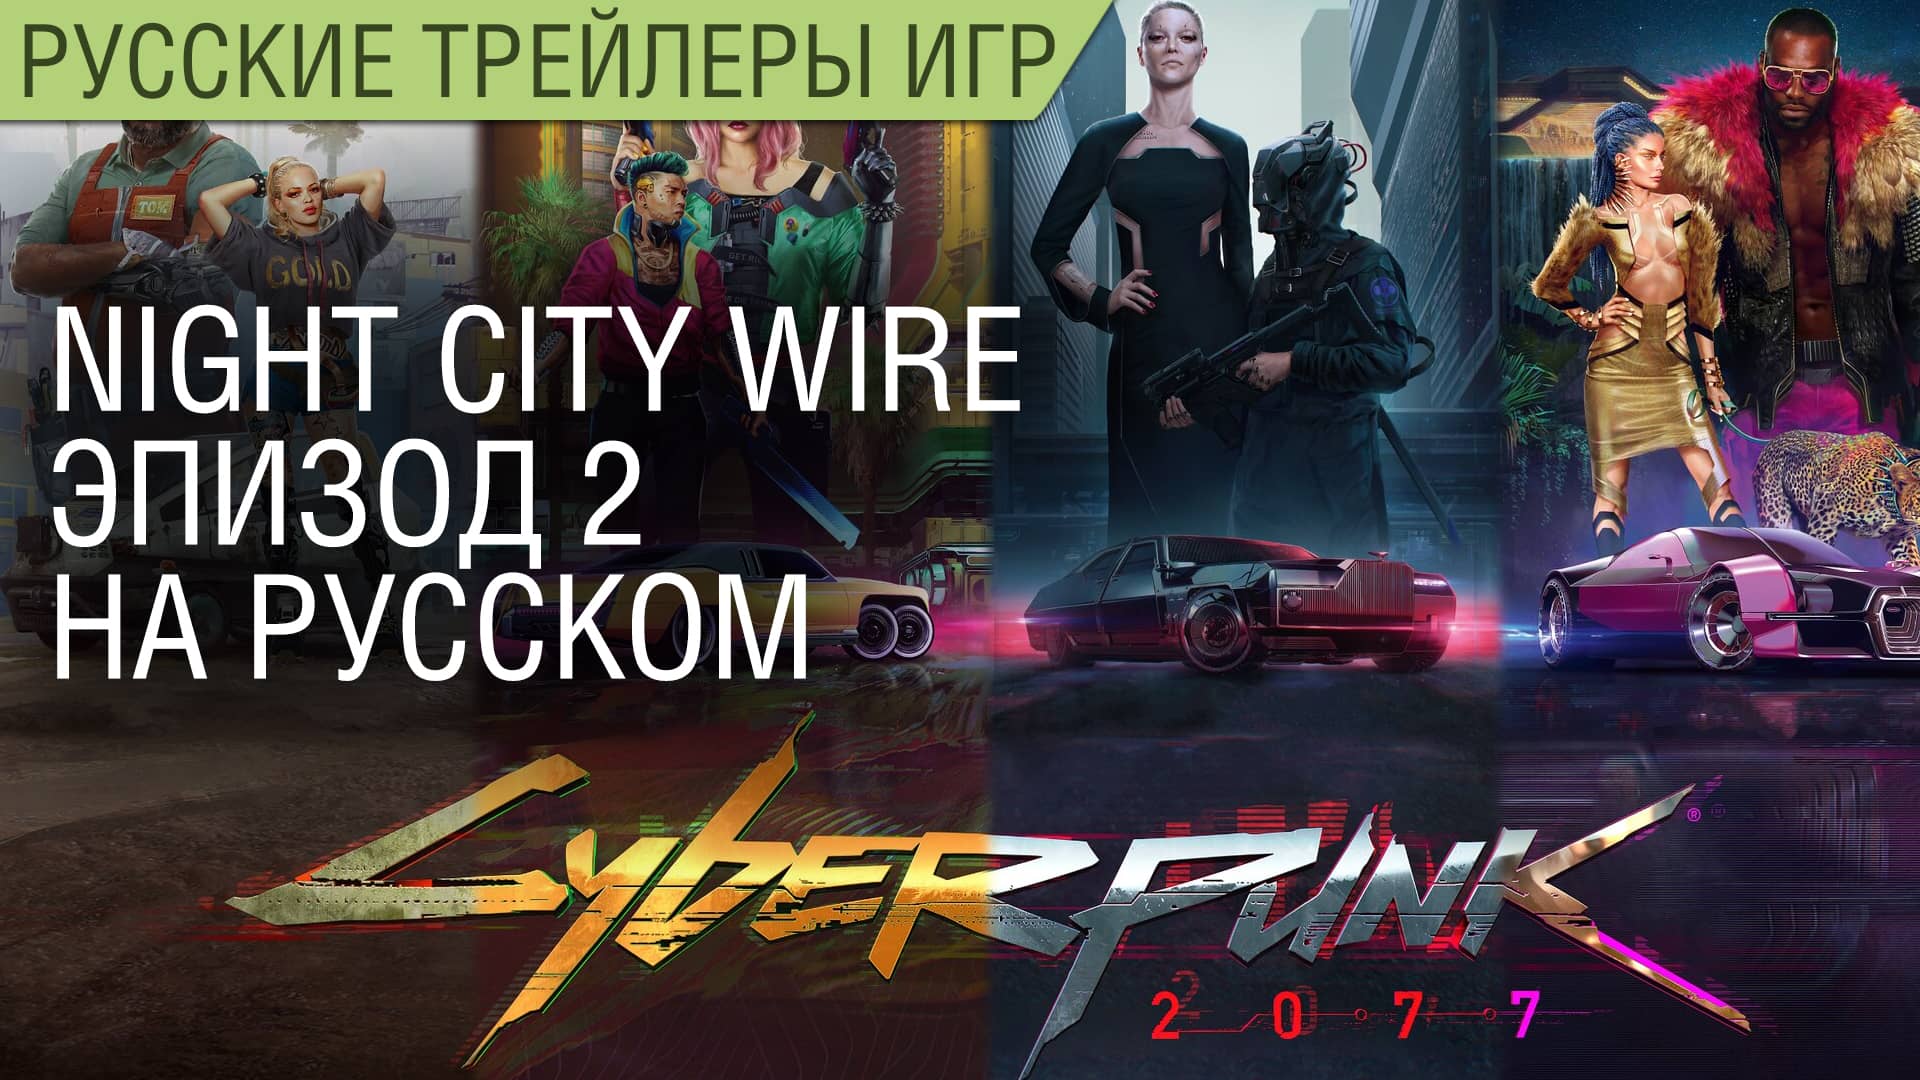 Cyberpunk 2077 — Night City Wire Эпизод 2 на русском (озвучка)